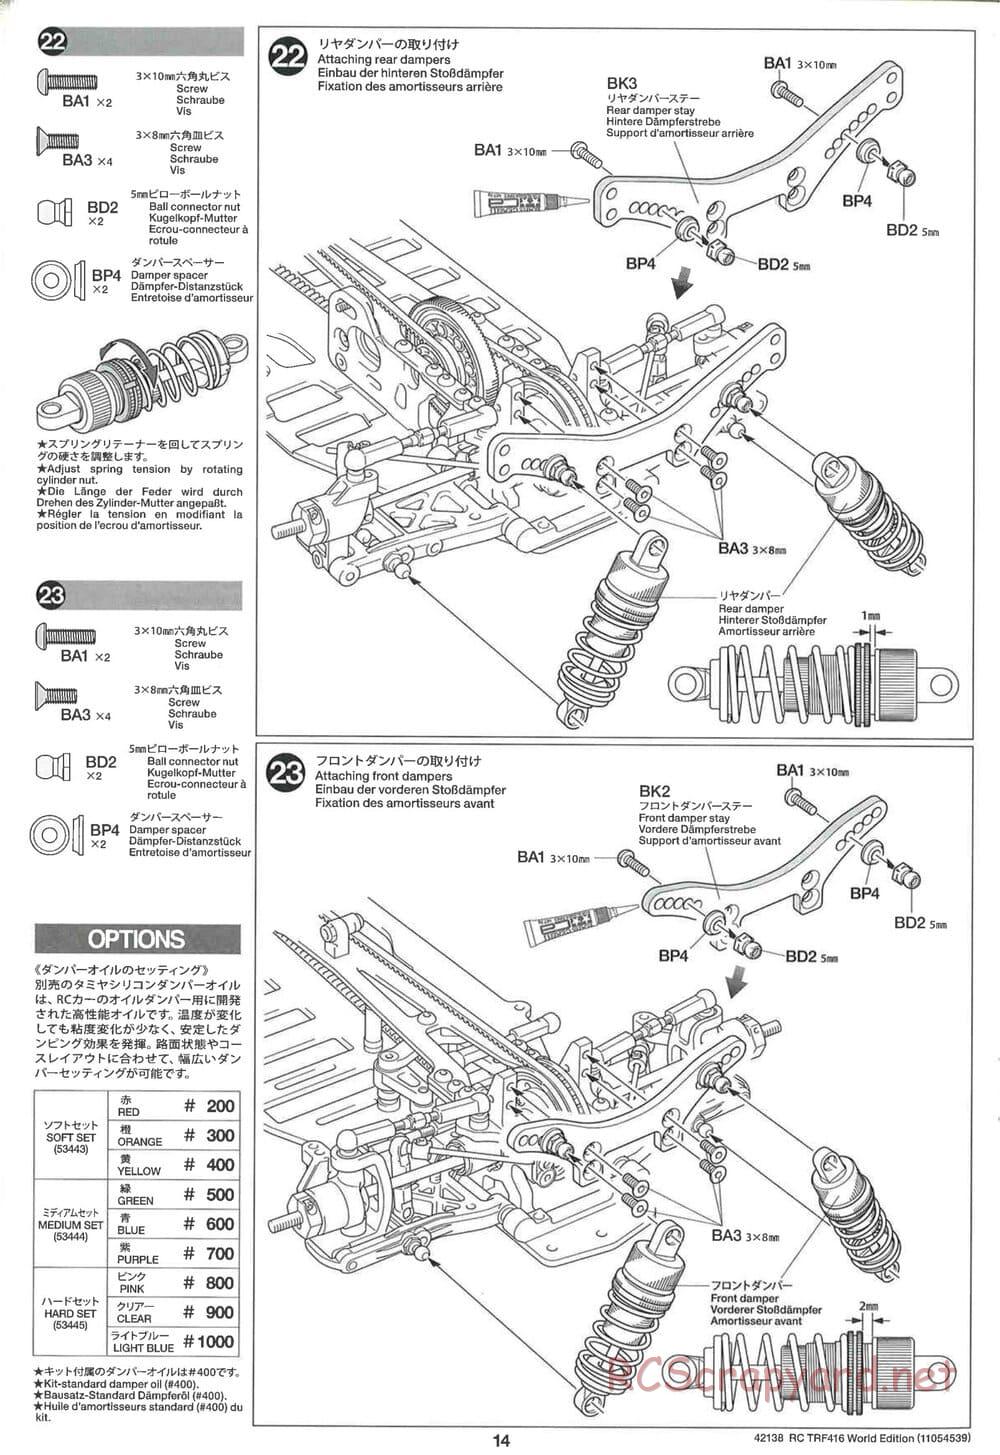 Tamiya - TRF416 World Edition Chassis - Manual - Page 14